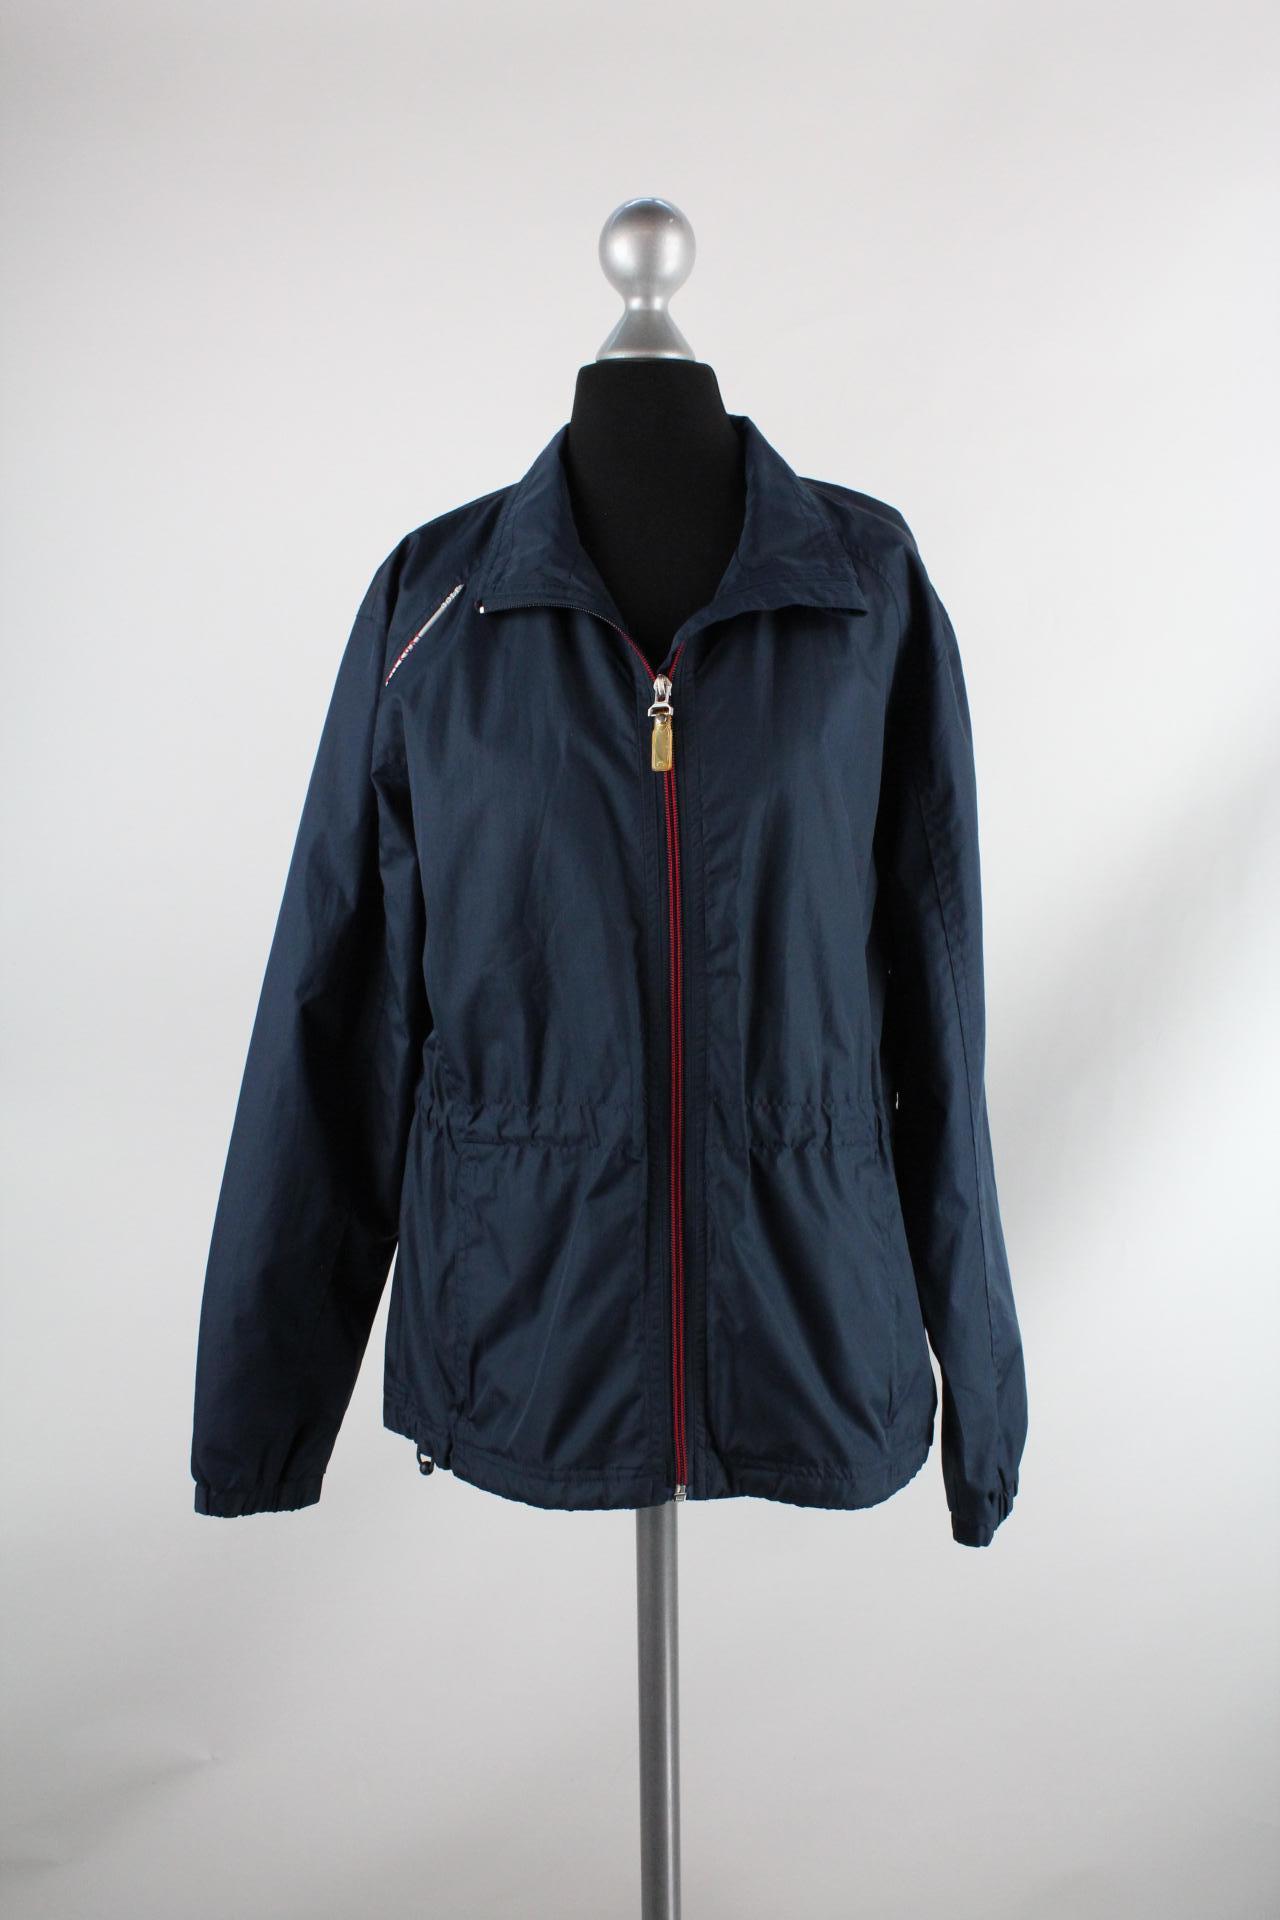 Hickory Golf Damen-Jacke blau Größe 40